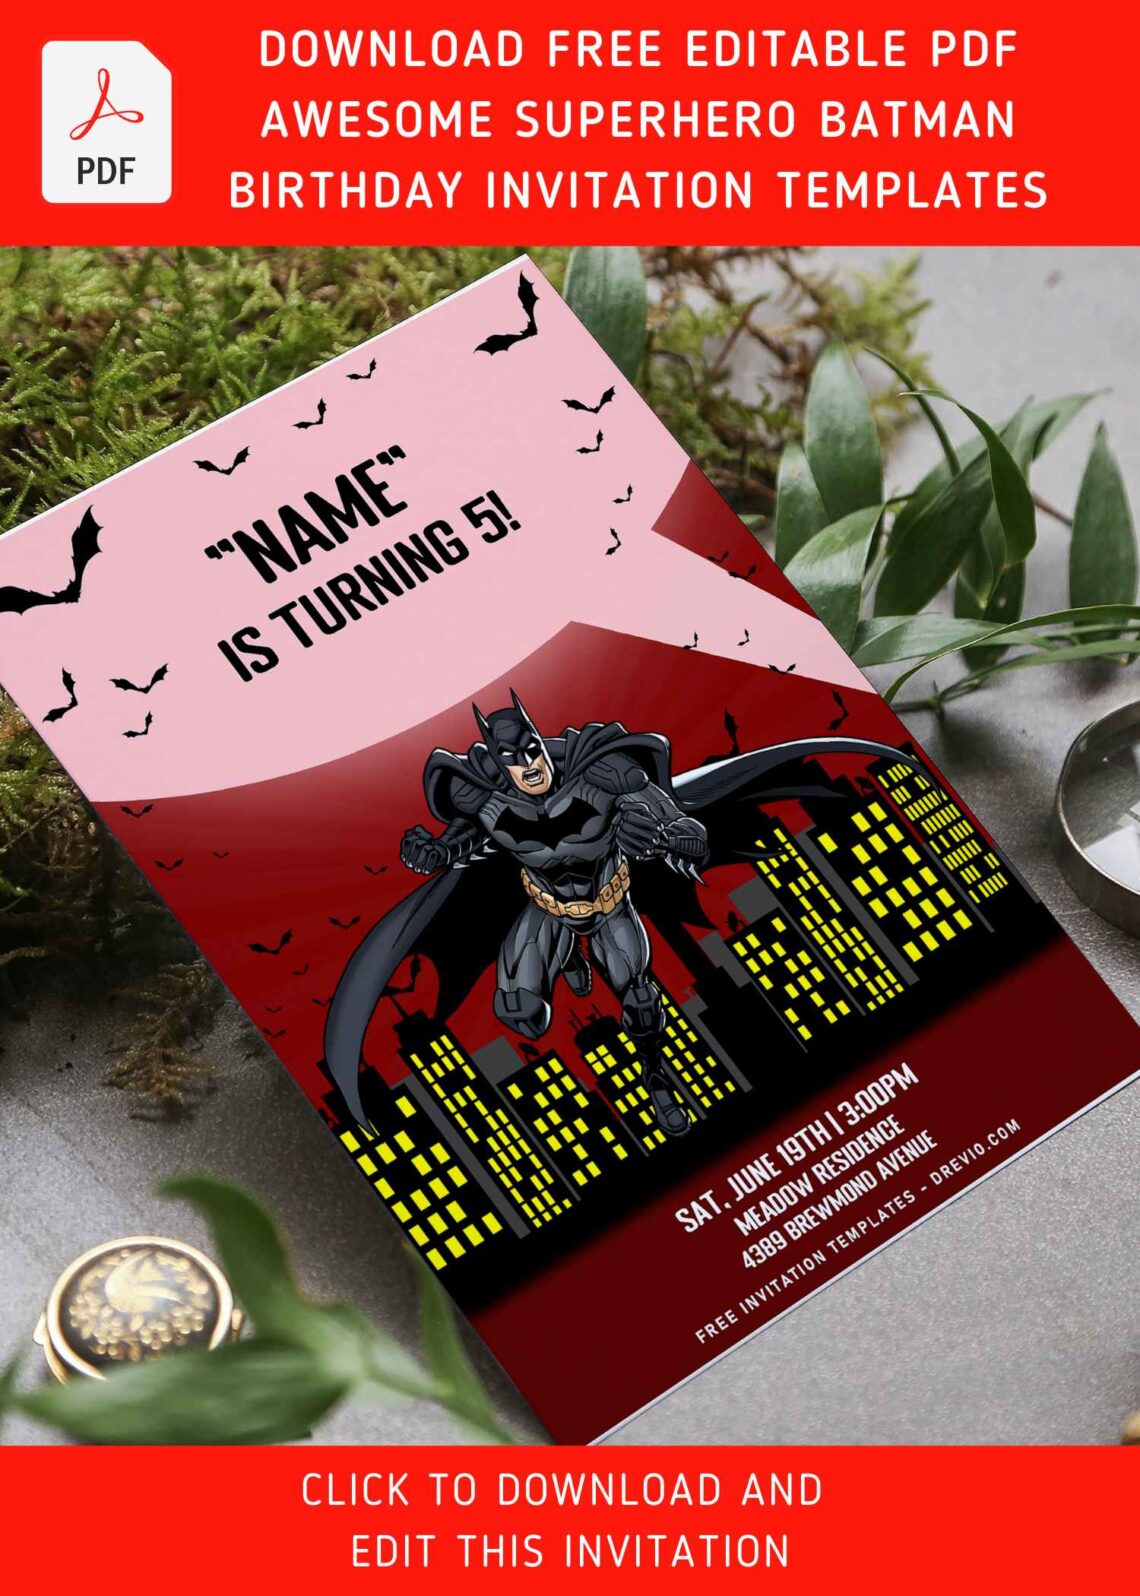 (Free Editable PDF) Awesome Gotham City Batman Birthday Invitation Templates with dark sunray background